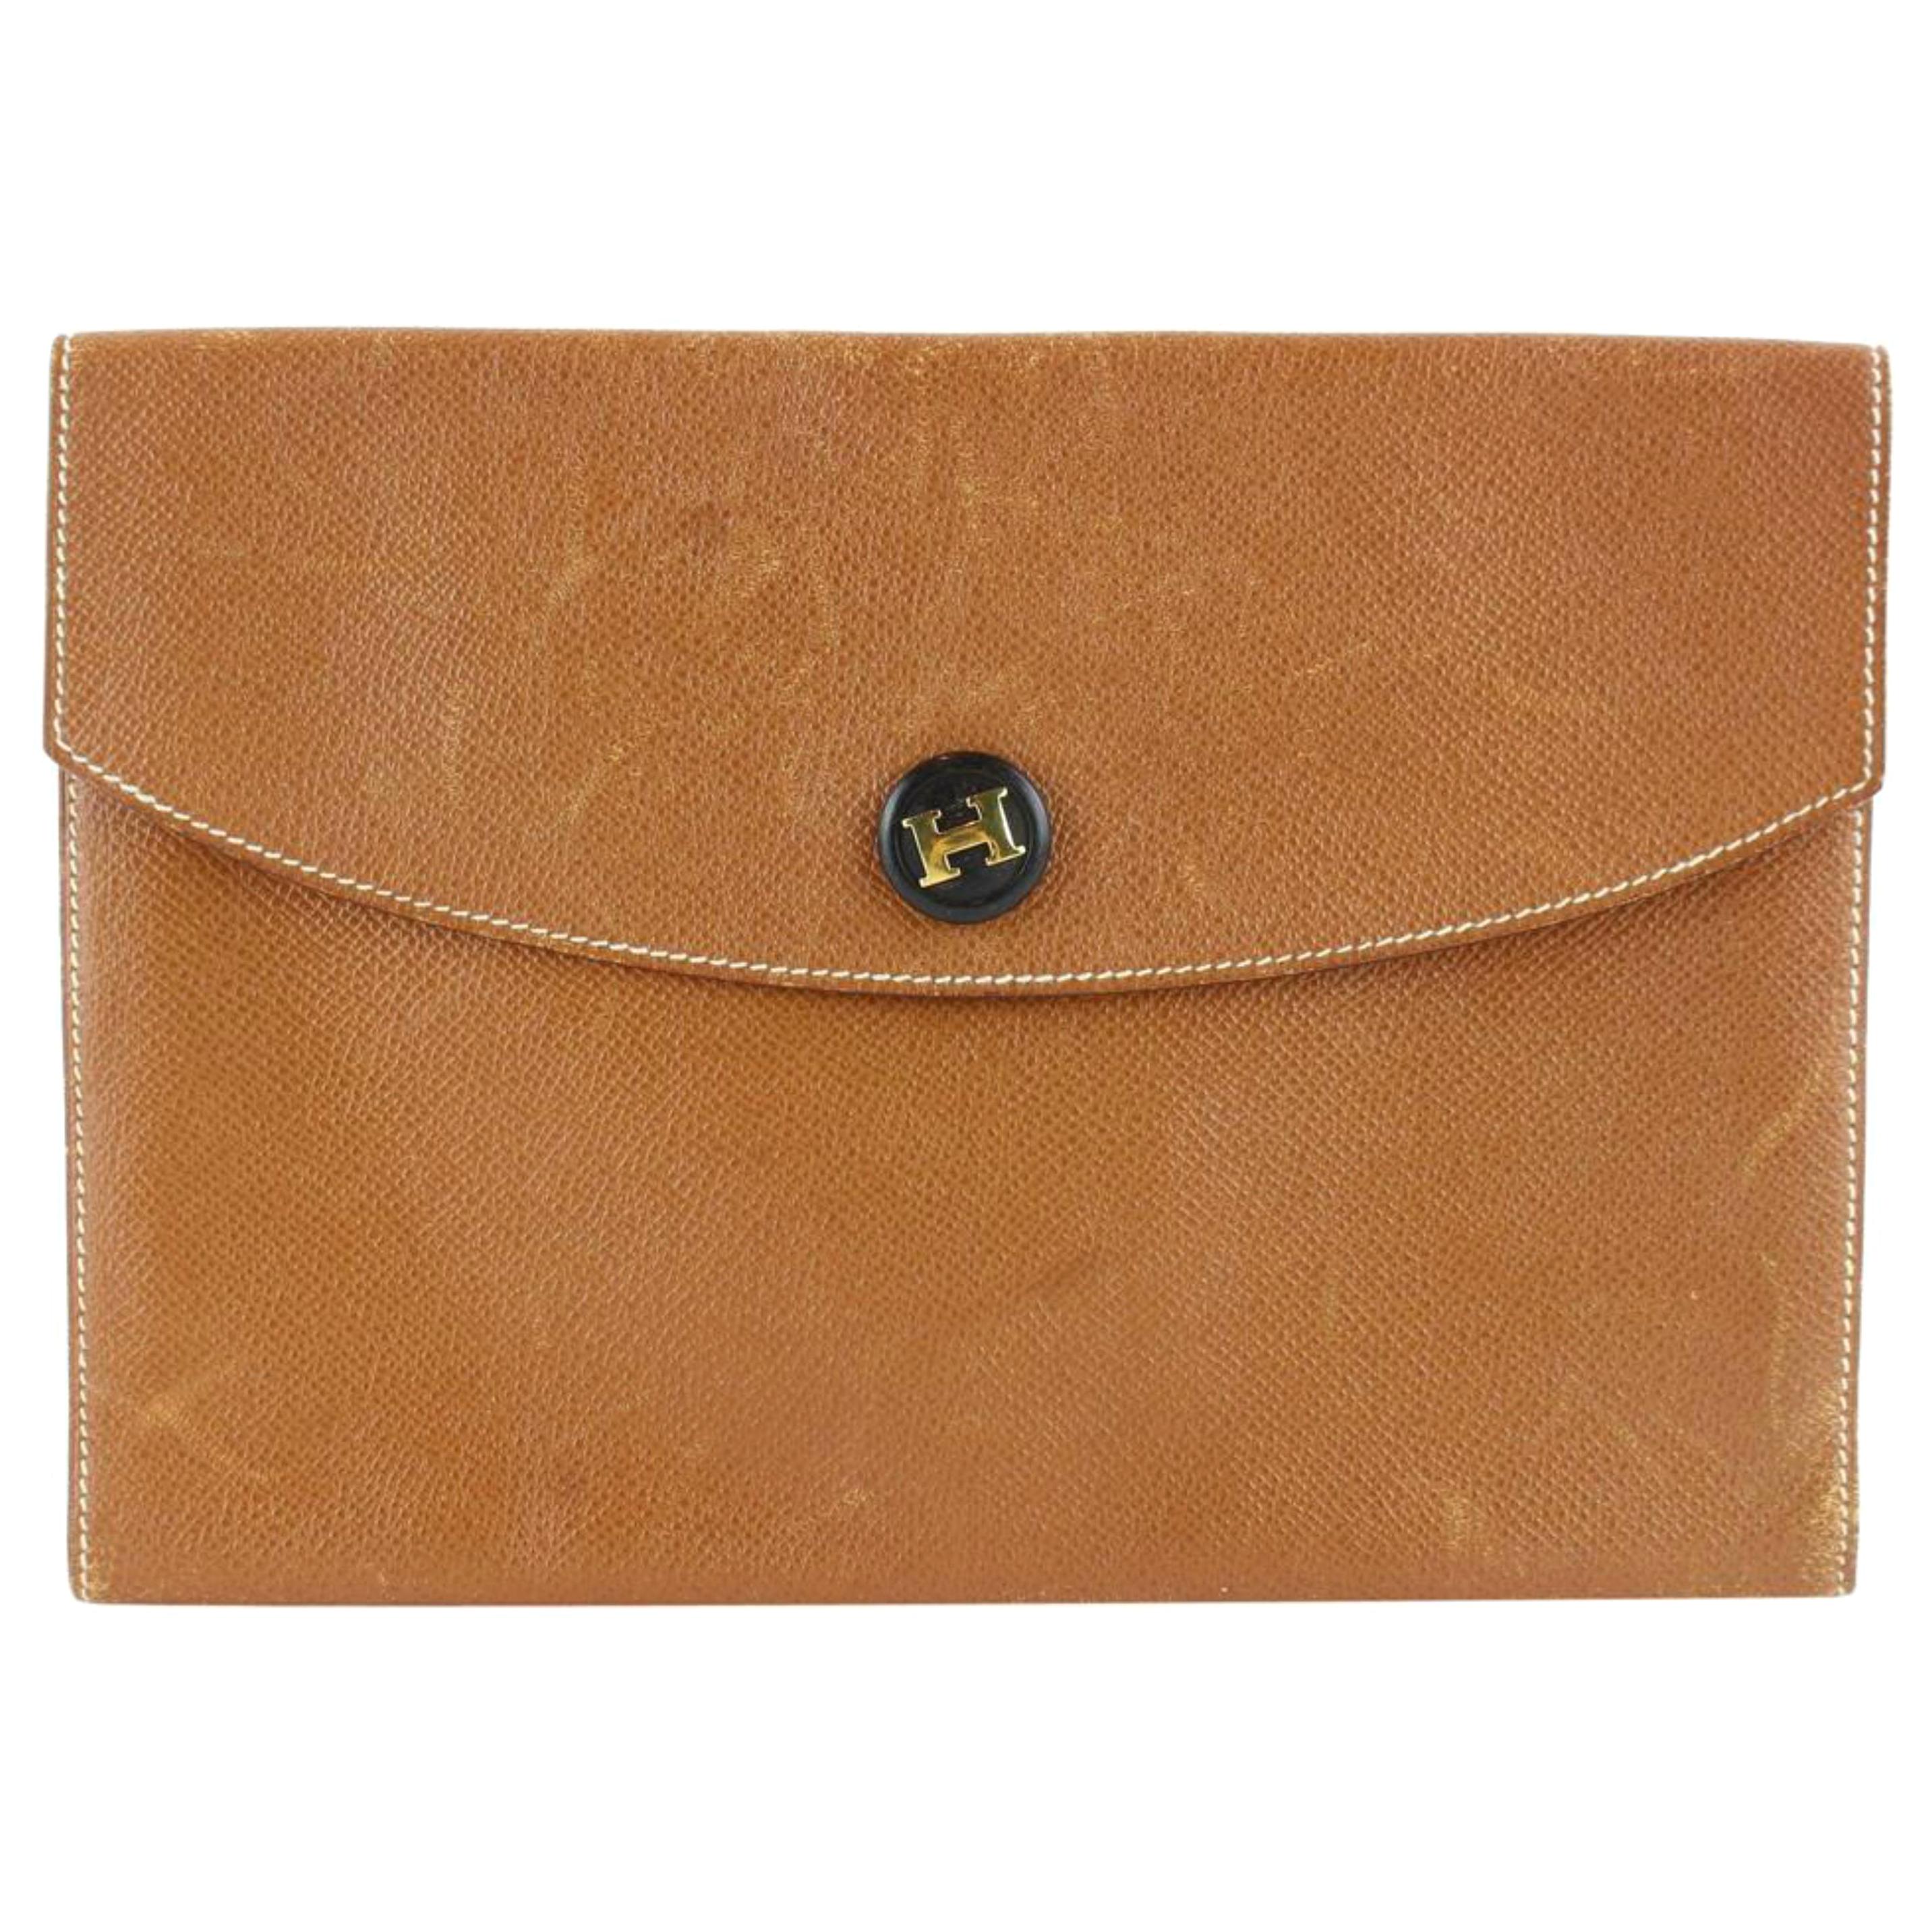 Hermès Pochette Rio Envelope 7hz1128 Brown Leather Clutch For Sale